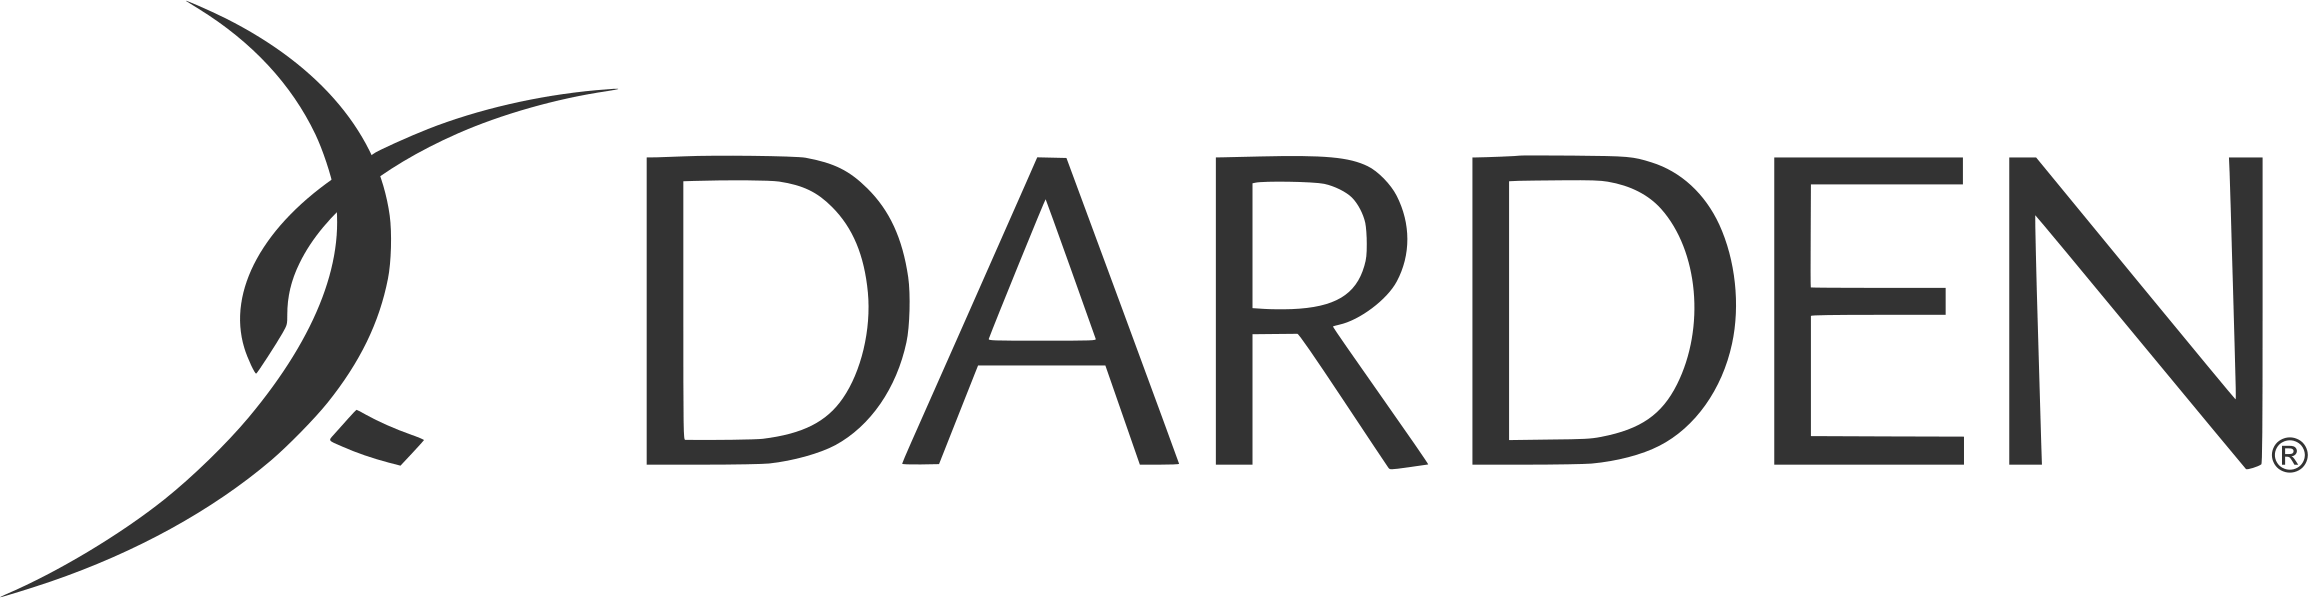 Darden-logo-black